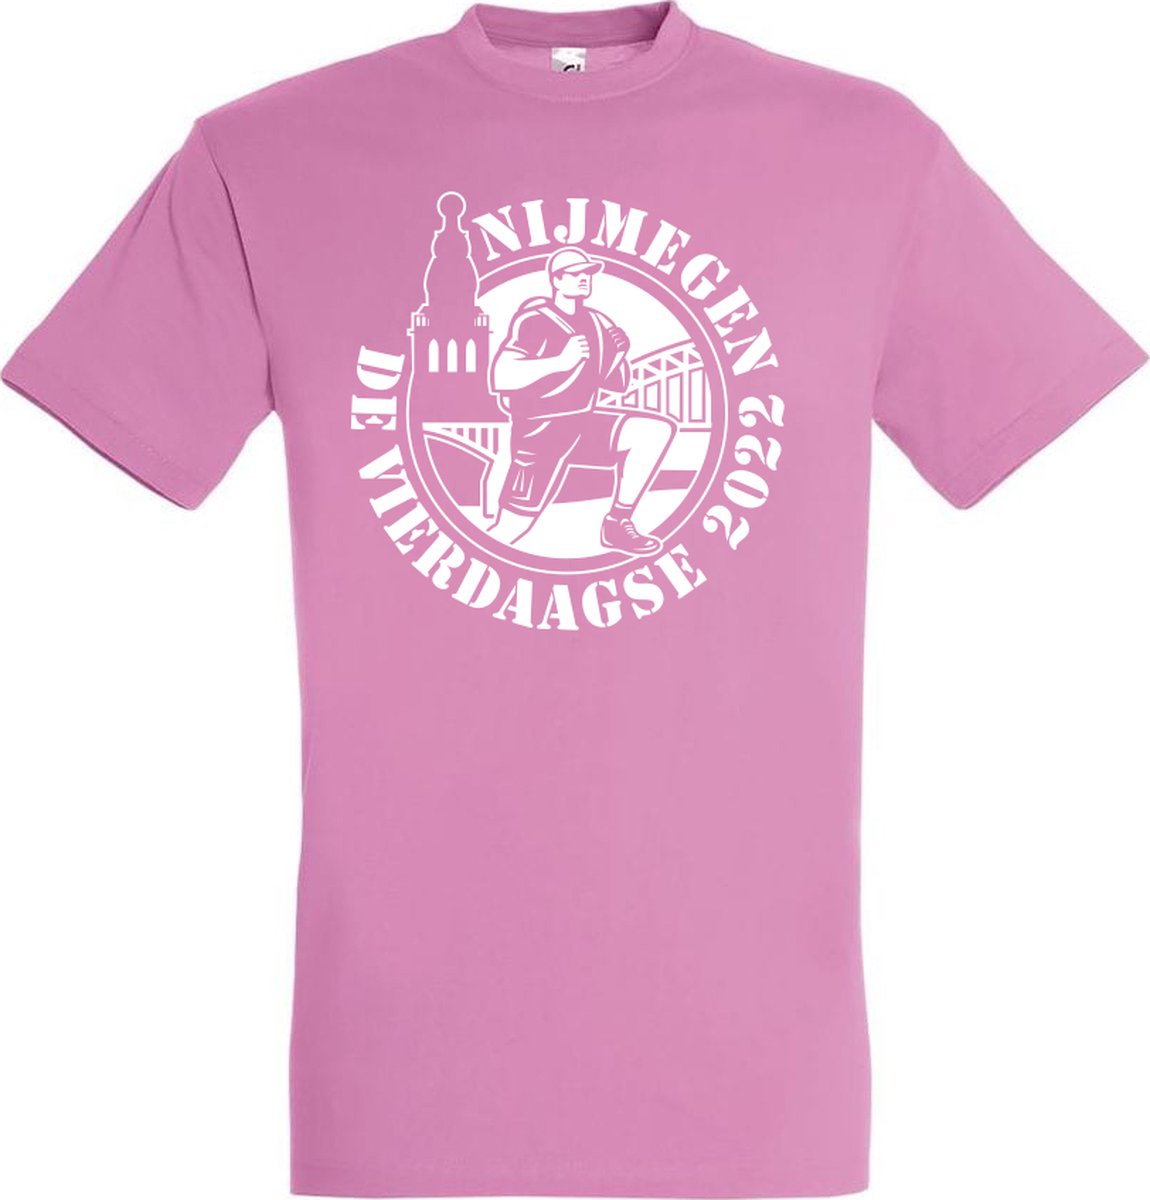 T-shirt CartoonShirt De Vierdaagse |Wandelvierdaagse | Vierdaagse Nijmegen | Roze woensdag | Roze | maat M